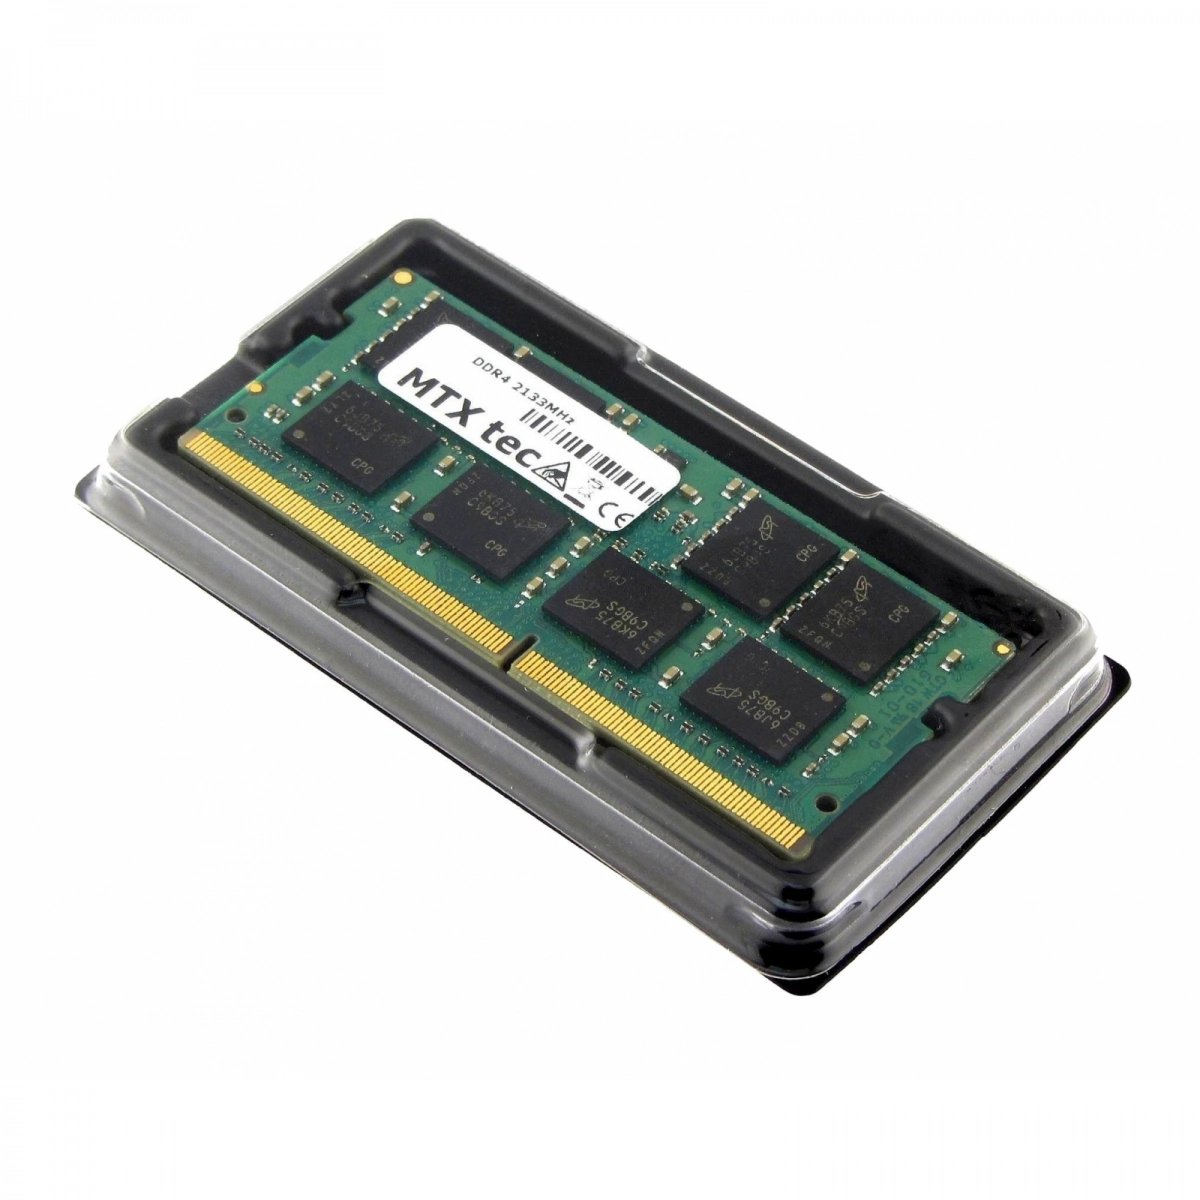 MTXtec 16GB Notebook RAM-Speicher SODIMM DDR4 PC4-17000, 2133MHz 260 pin